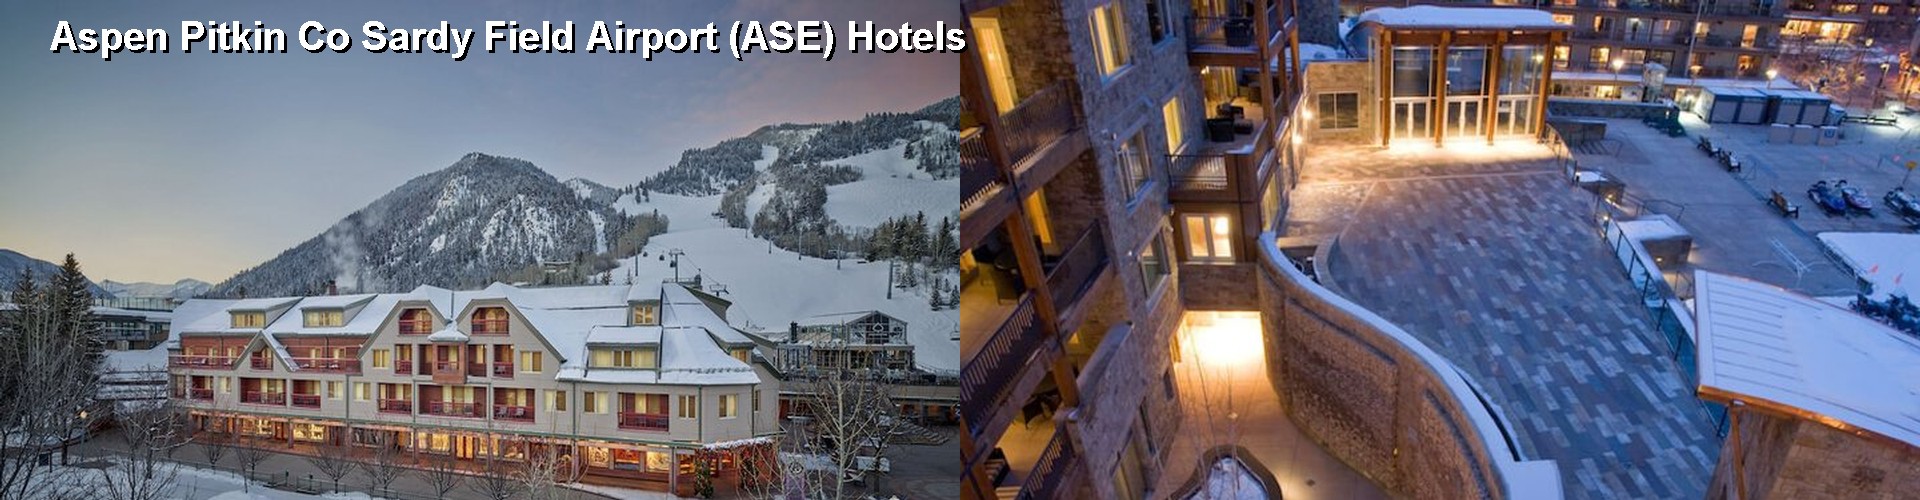 5 Best Hotels near Aspen Pitkin Co Sardy Field Airport (ASE)